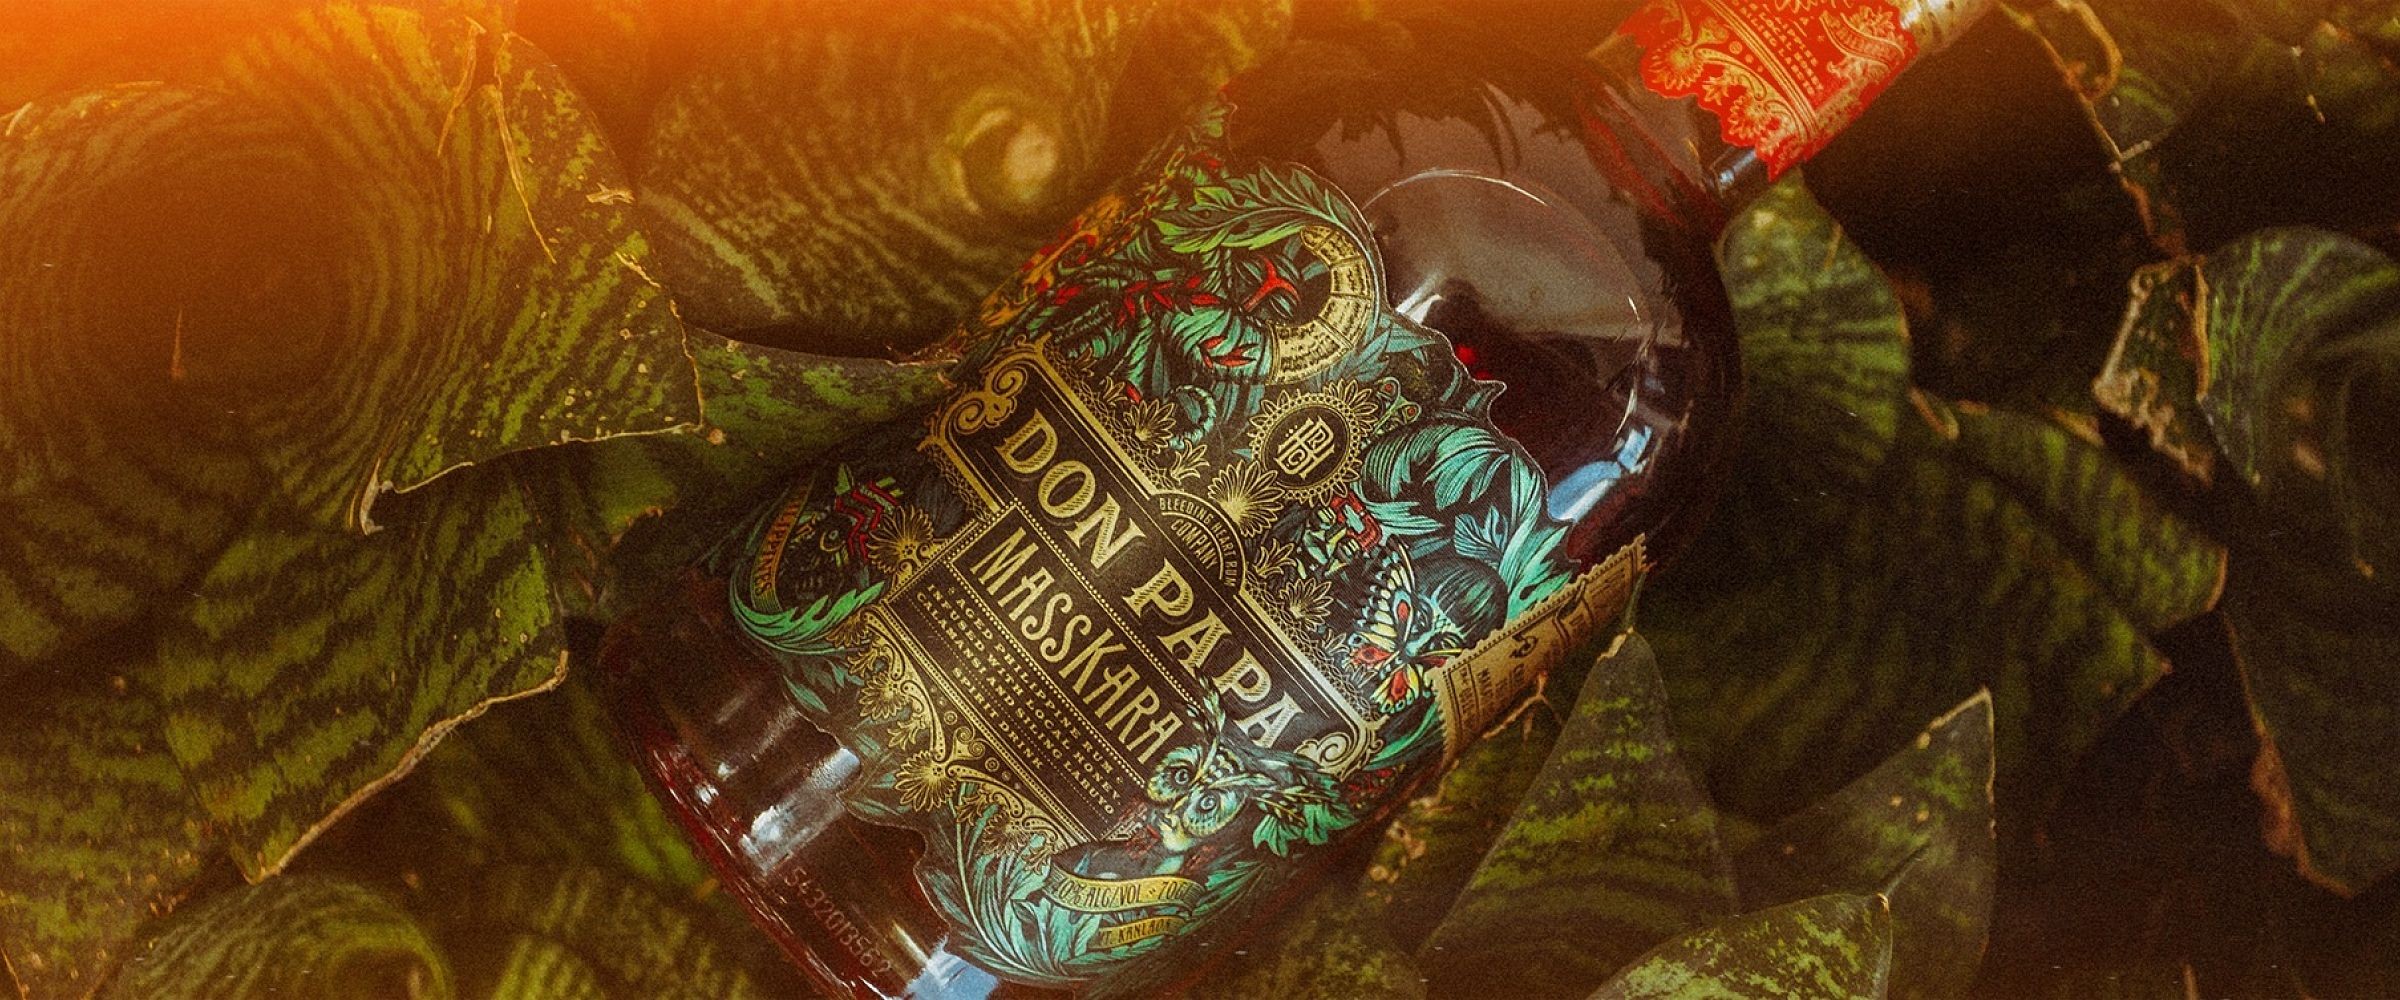 Don Papa Masskara Rum: kleurrijk en festief